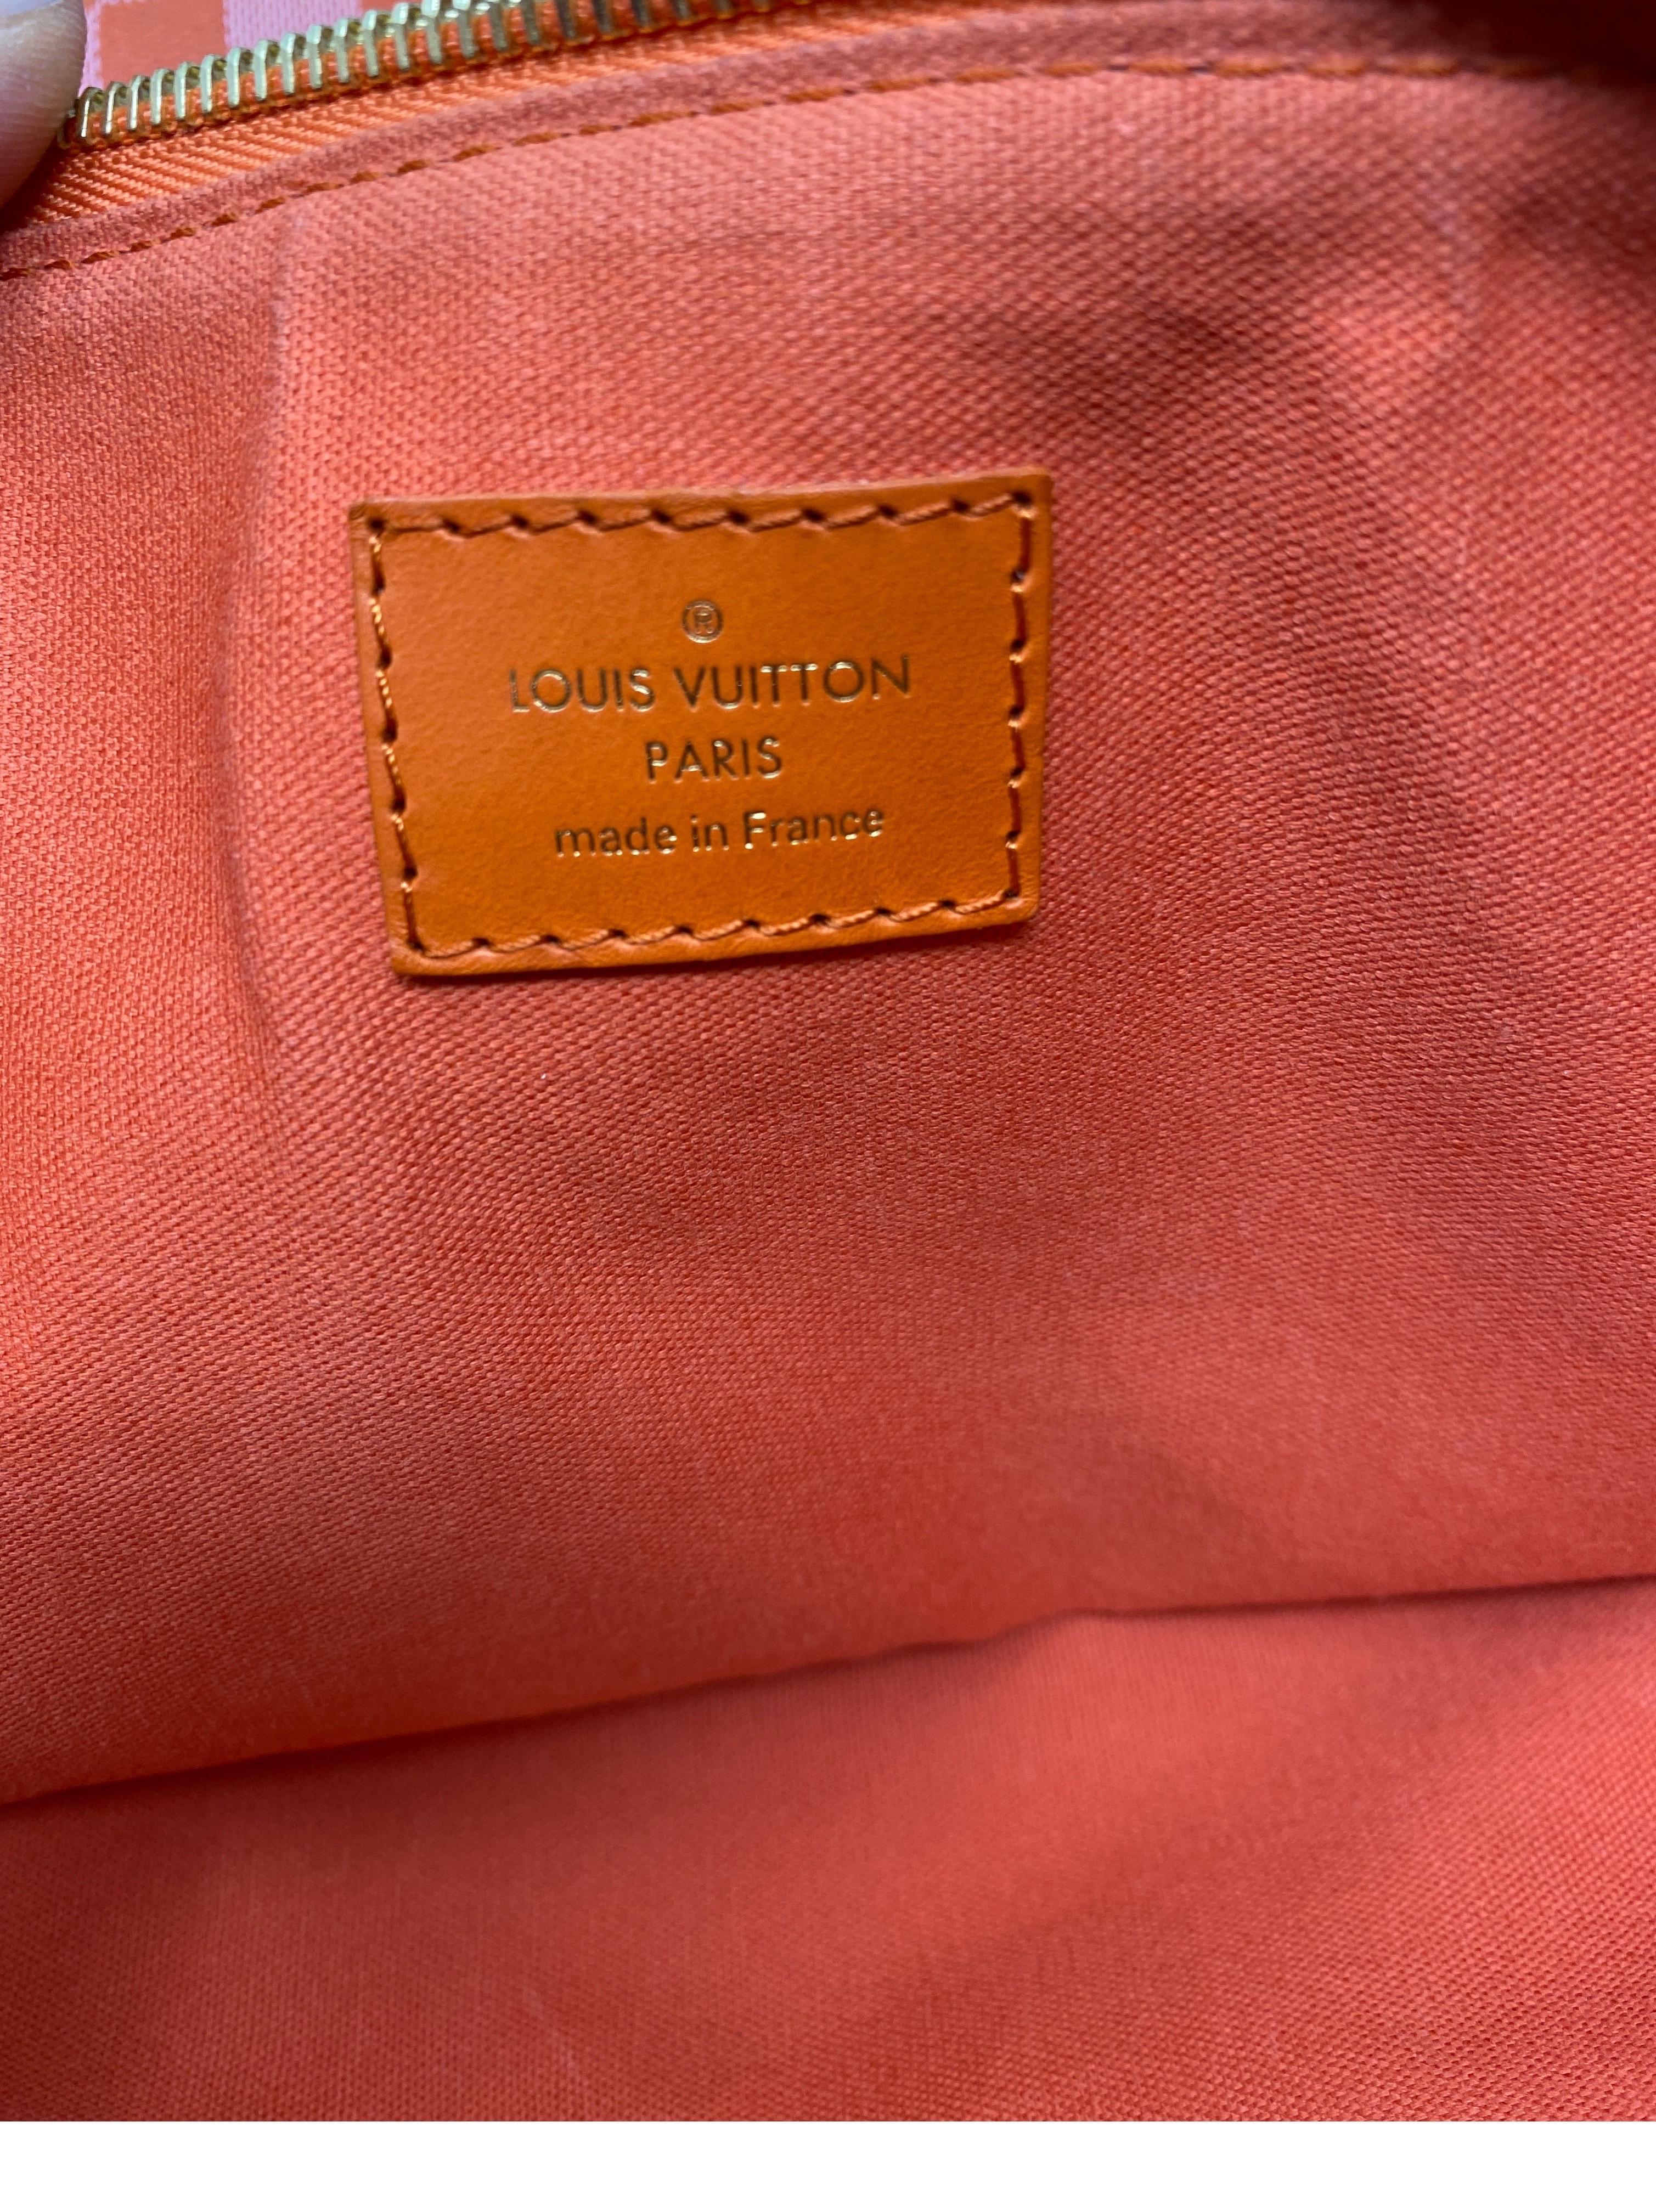 Louis Vuitton Orange Checkered Bag  12